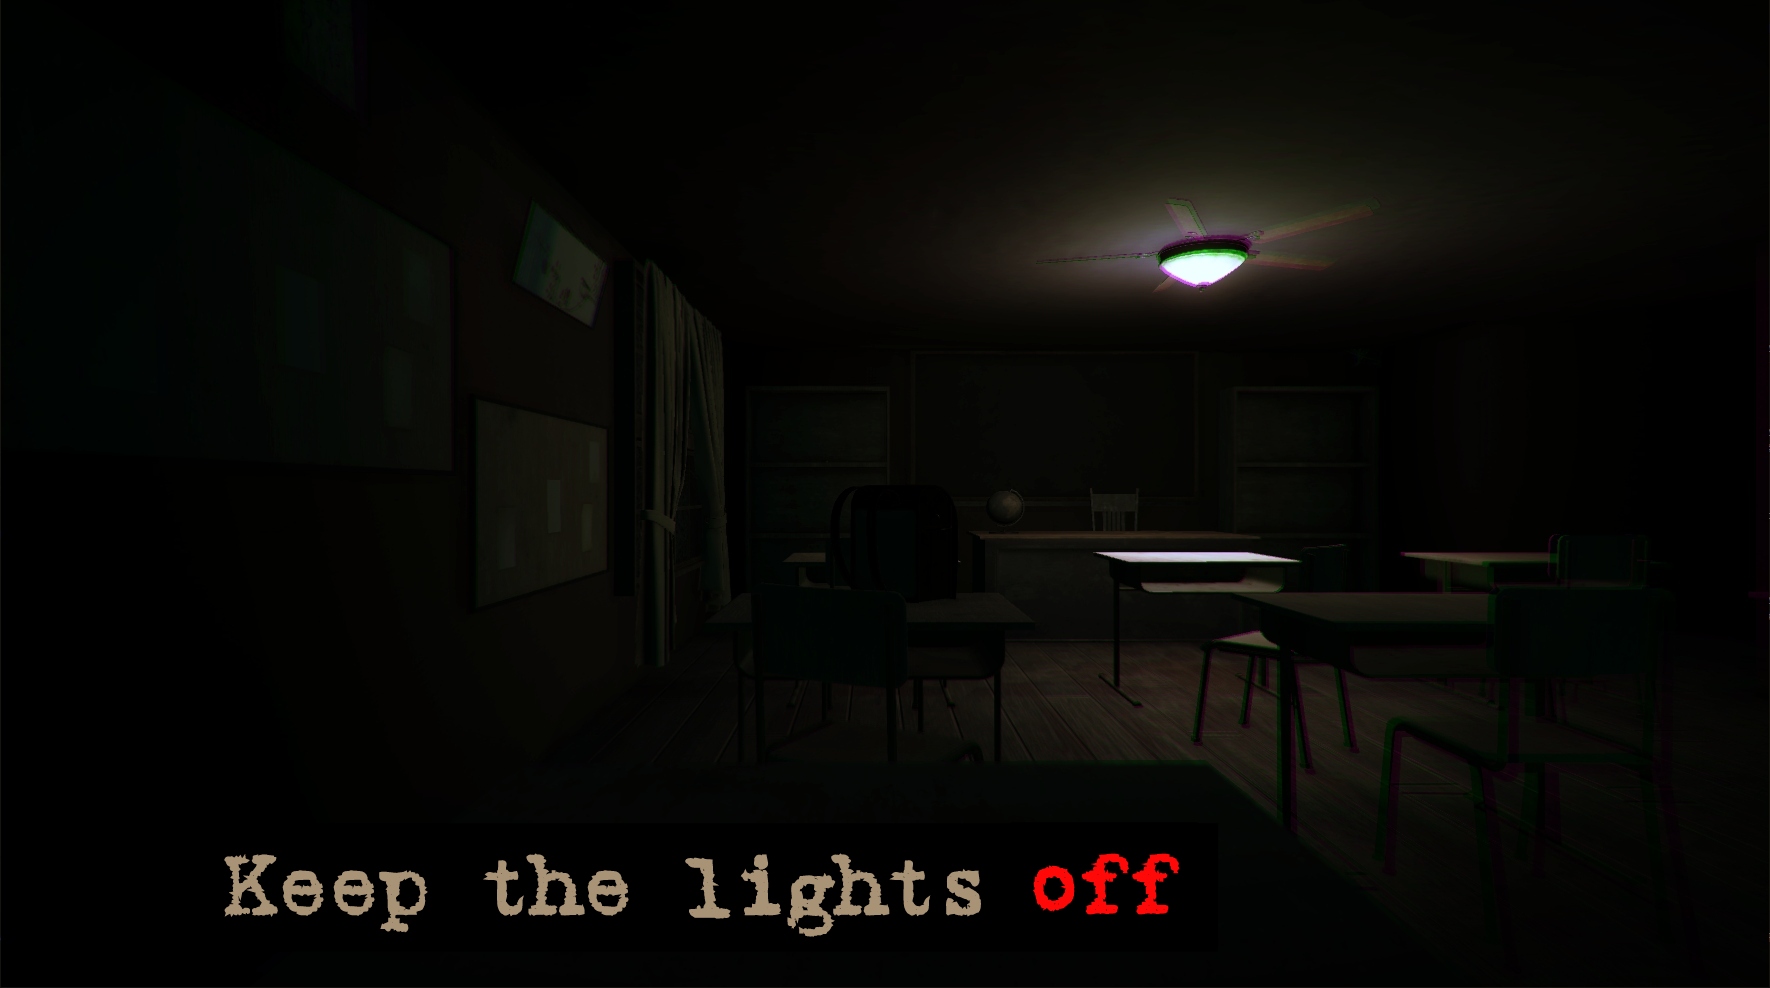 Keep the lights off